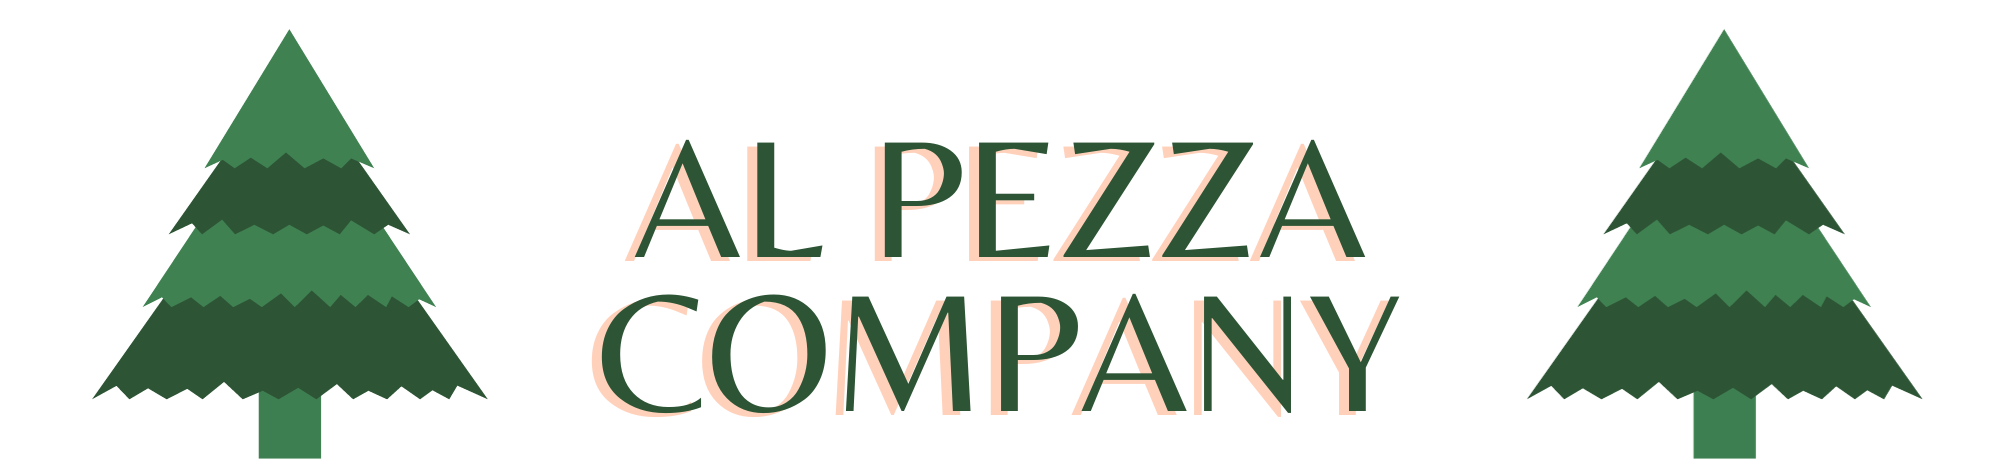 Al Pezza Company